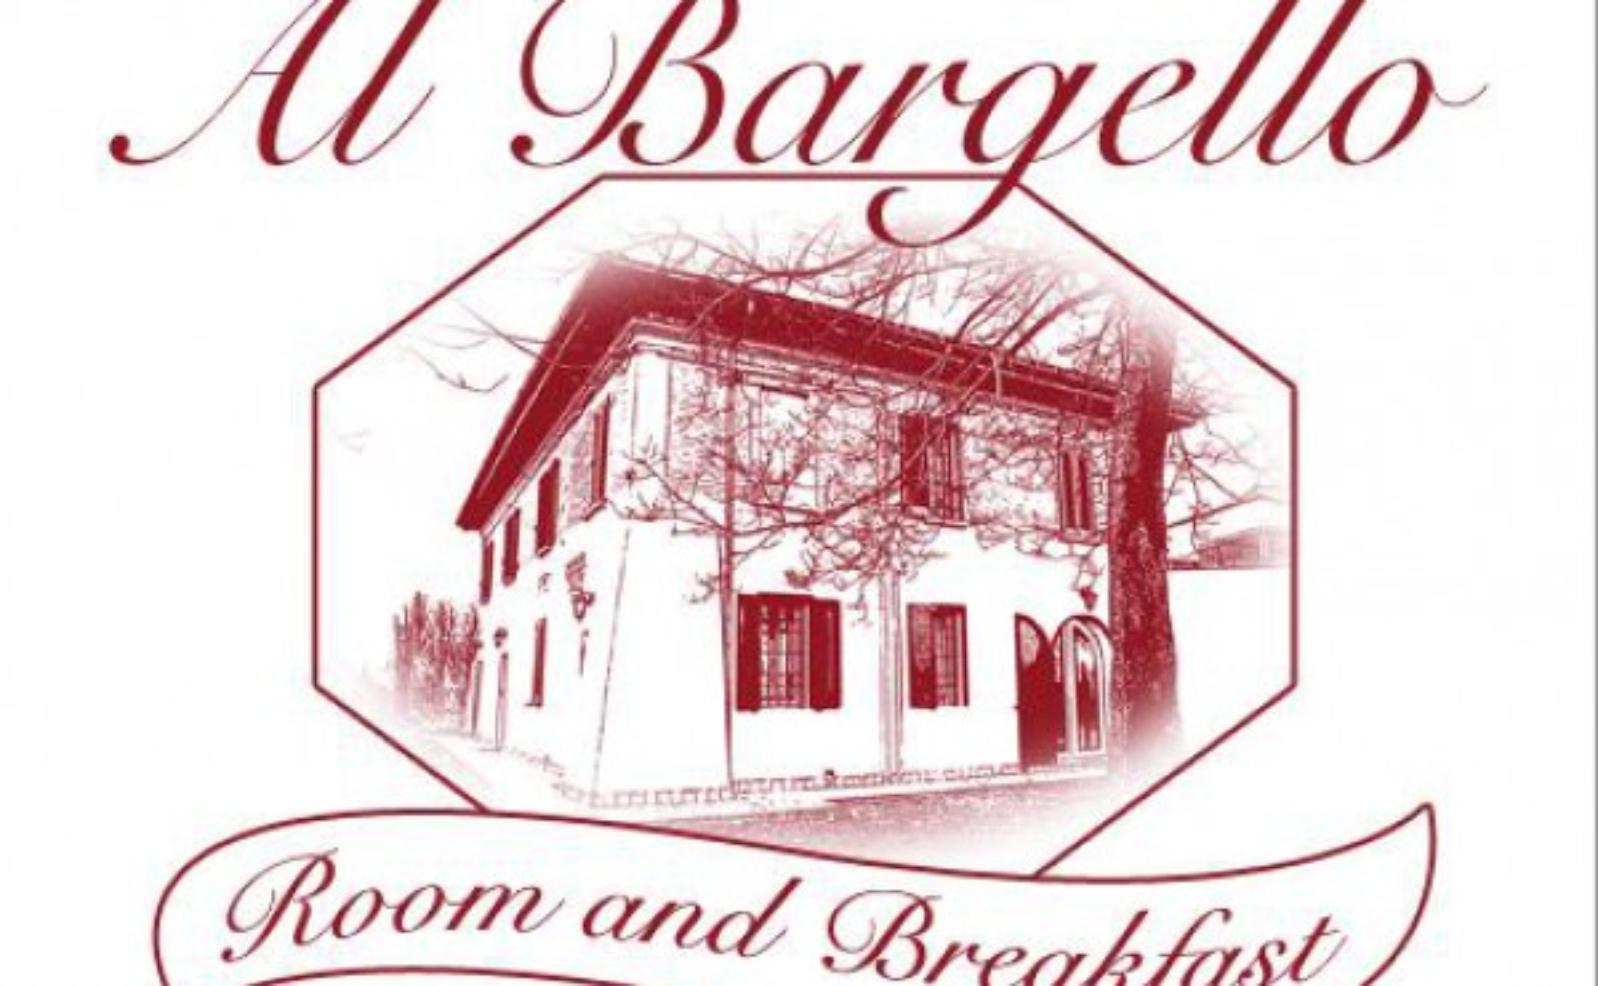 Al Bargello Room & Breakfast